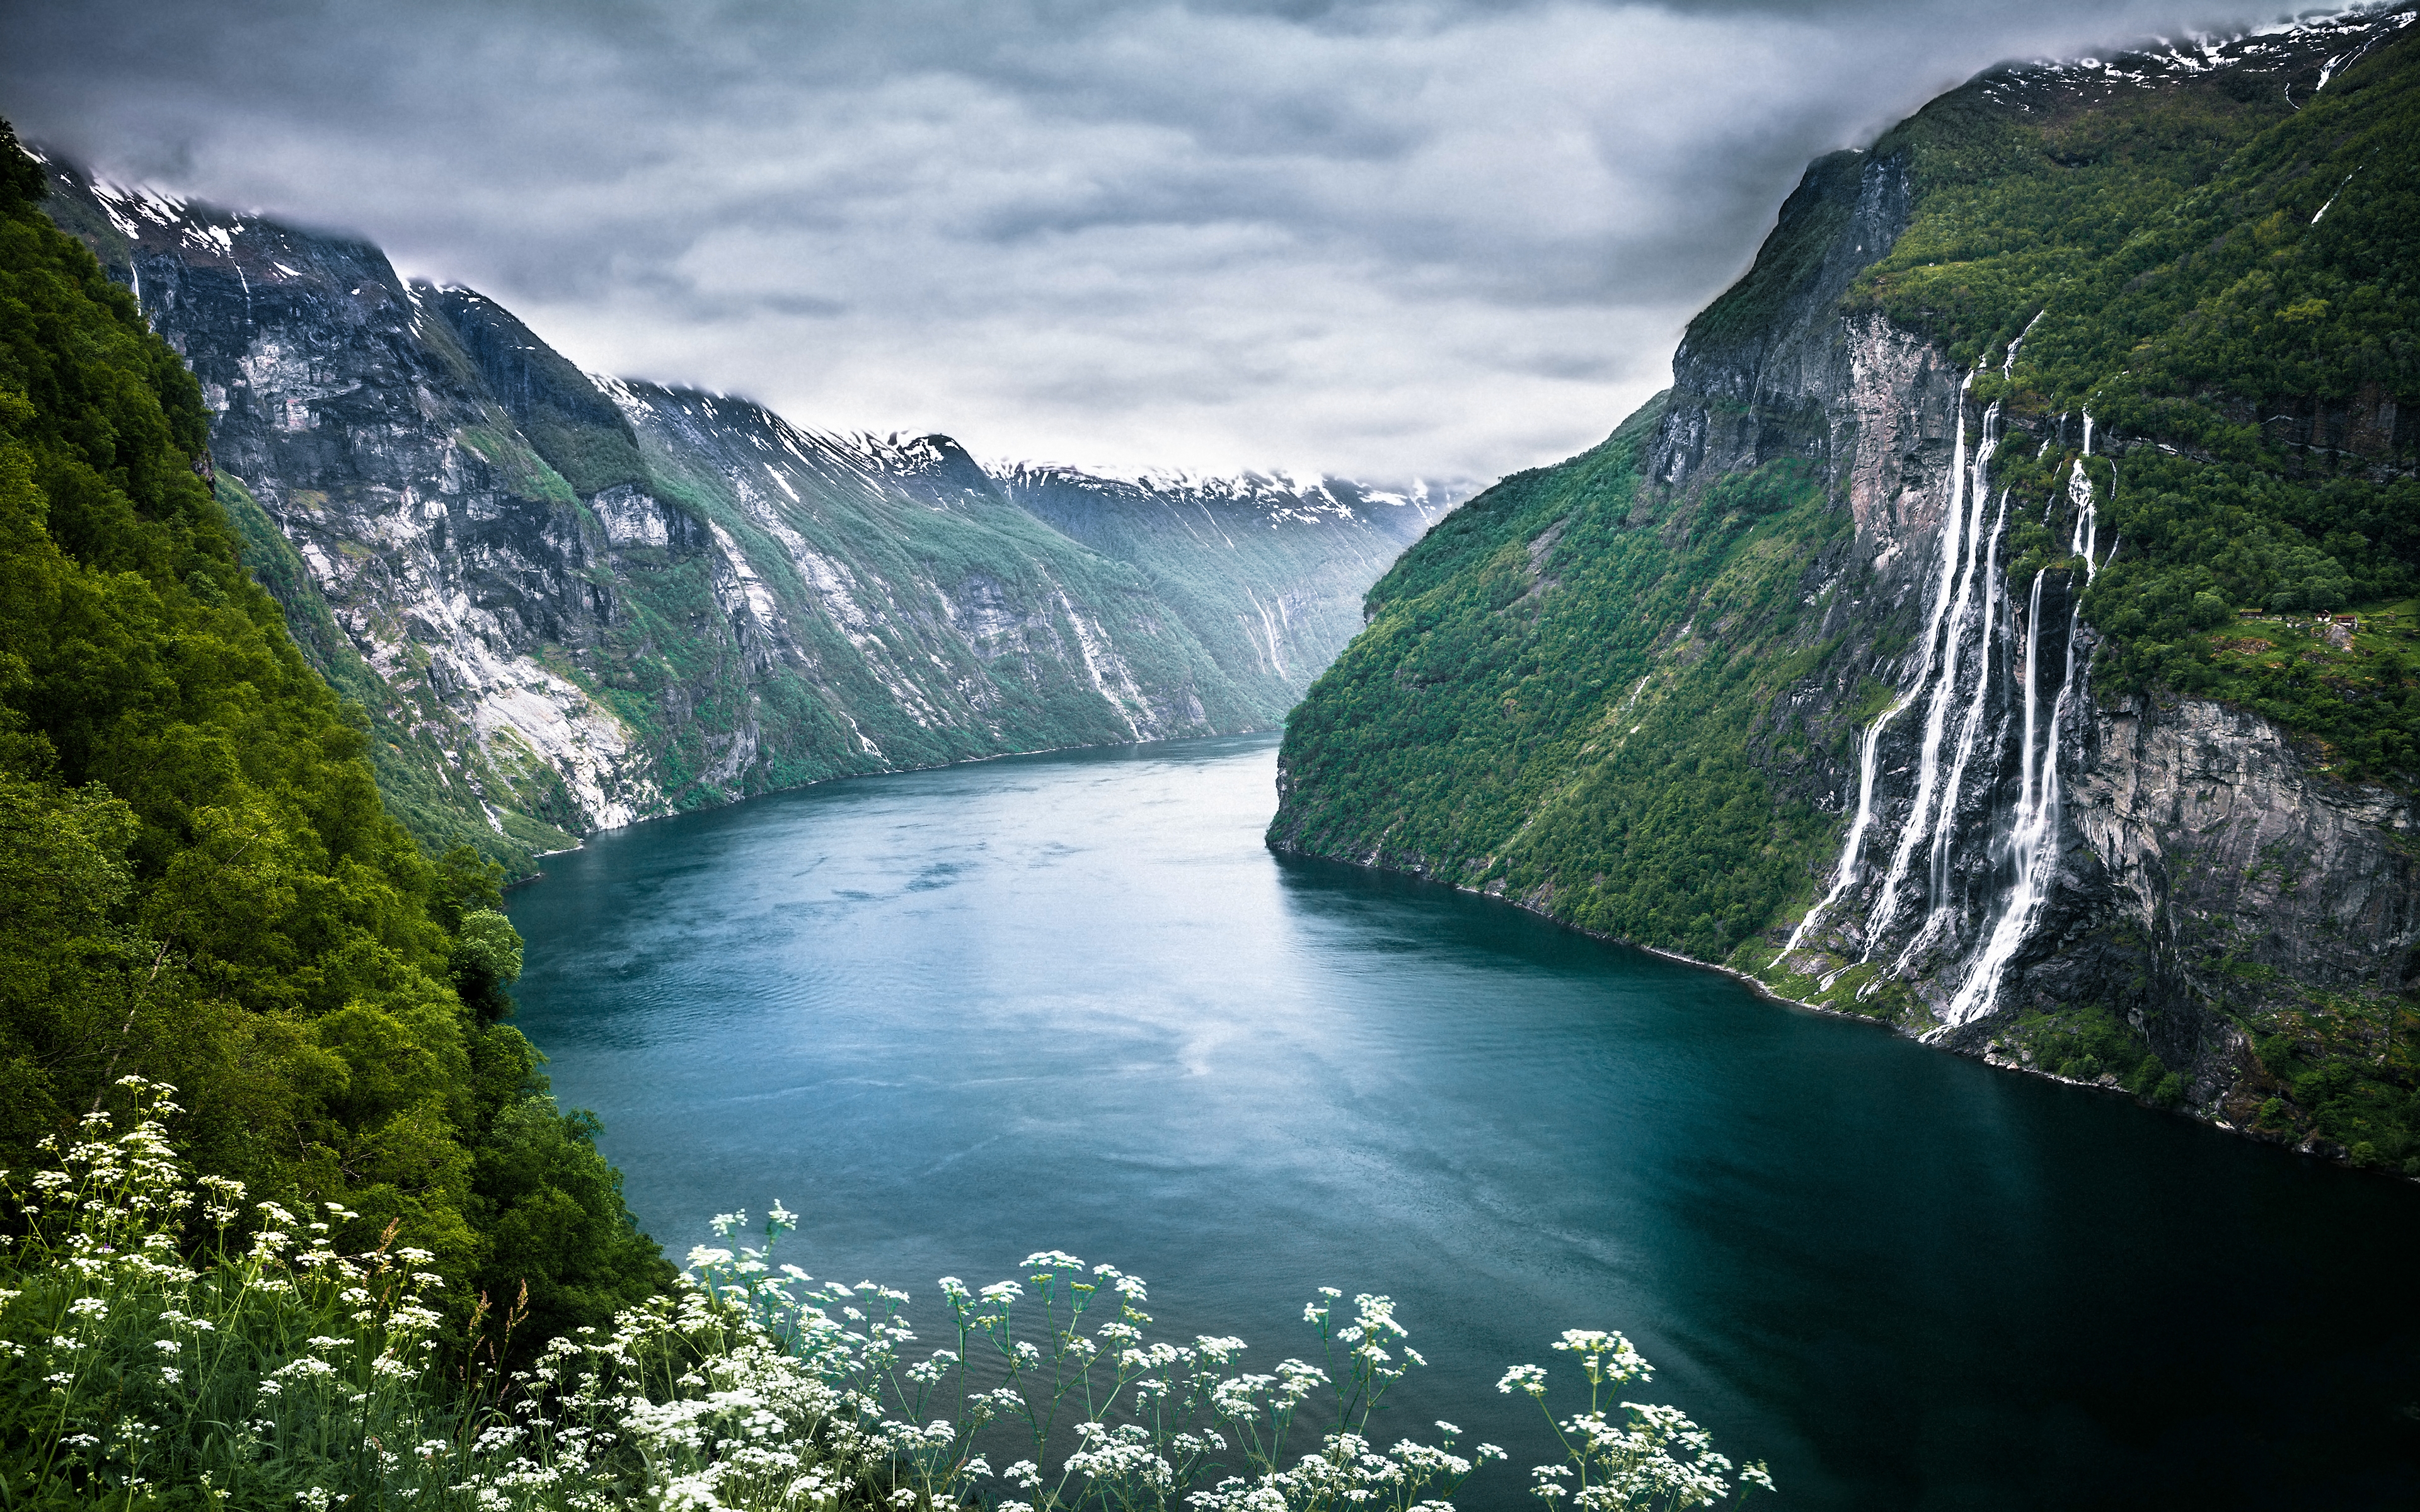 HD wallpaper, Geirangerfjorden, Cloudy Sky, Cliffs, Mountains, River, Flowing Water, Evening, Landscape, Norway, Seven Sisters Waterfalls